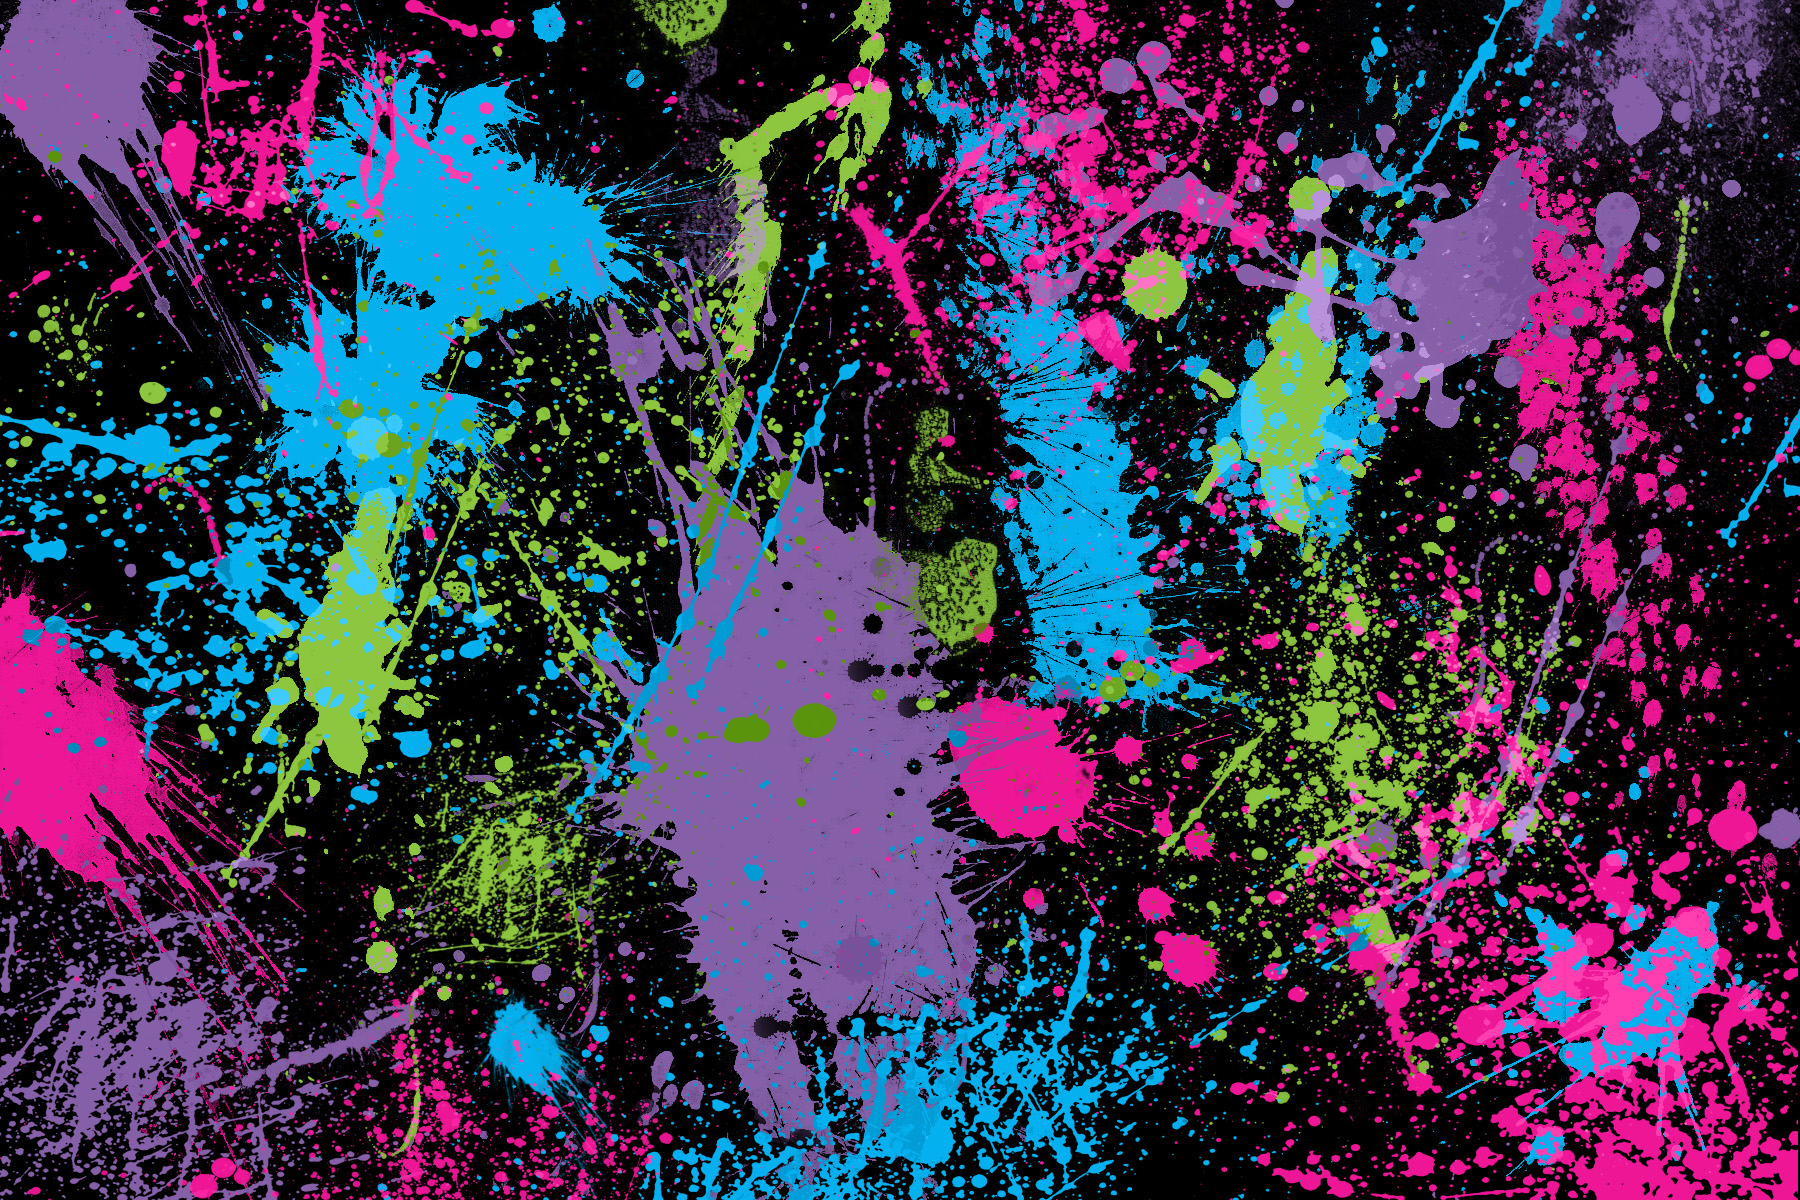 Download 48+ Neon Splatter Paint Wallpaper on WallpaperSafari